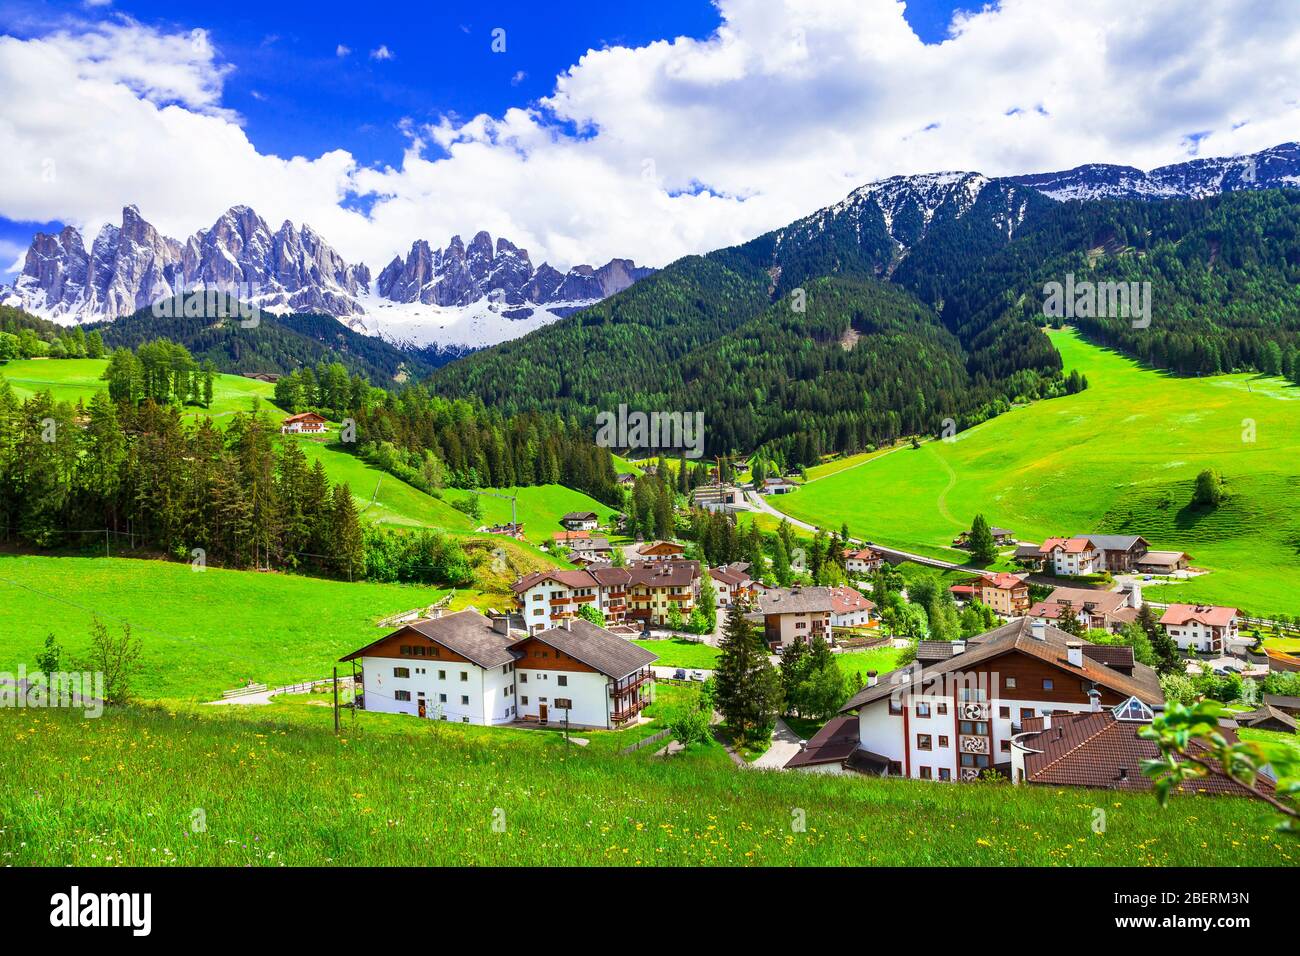 Paysage alpin impressionnant, Val di Funes, Trentin, Italie. Banque D'Images